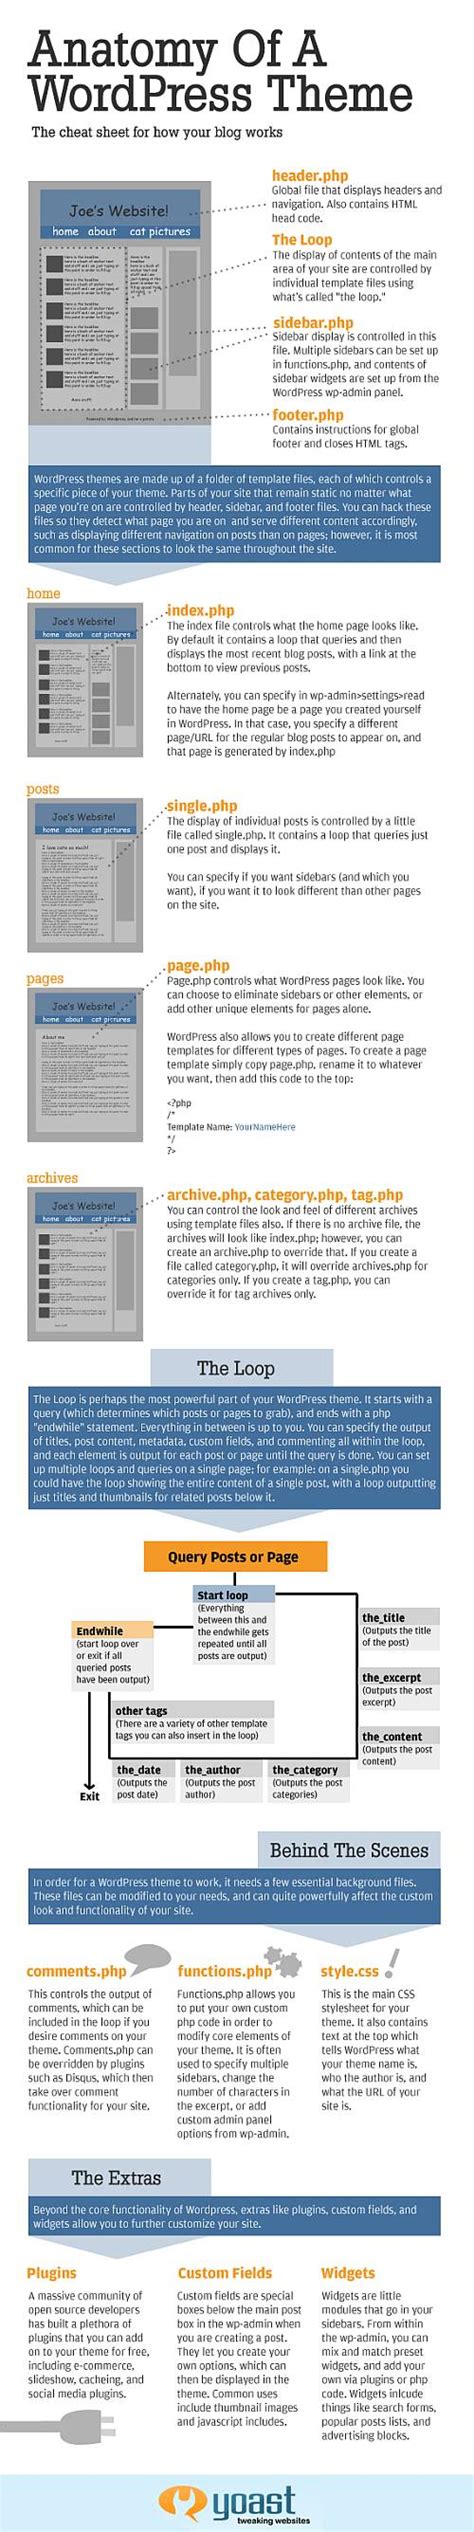 Anatomy Of A Wordpress Theme Infographic